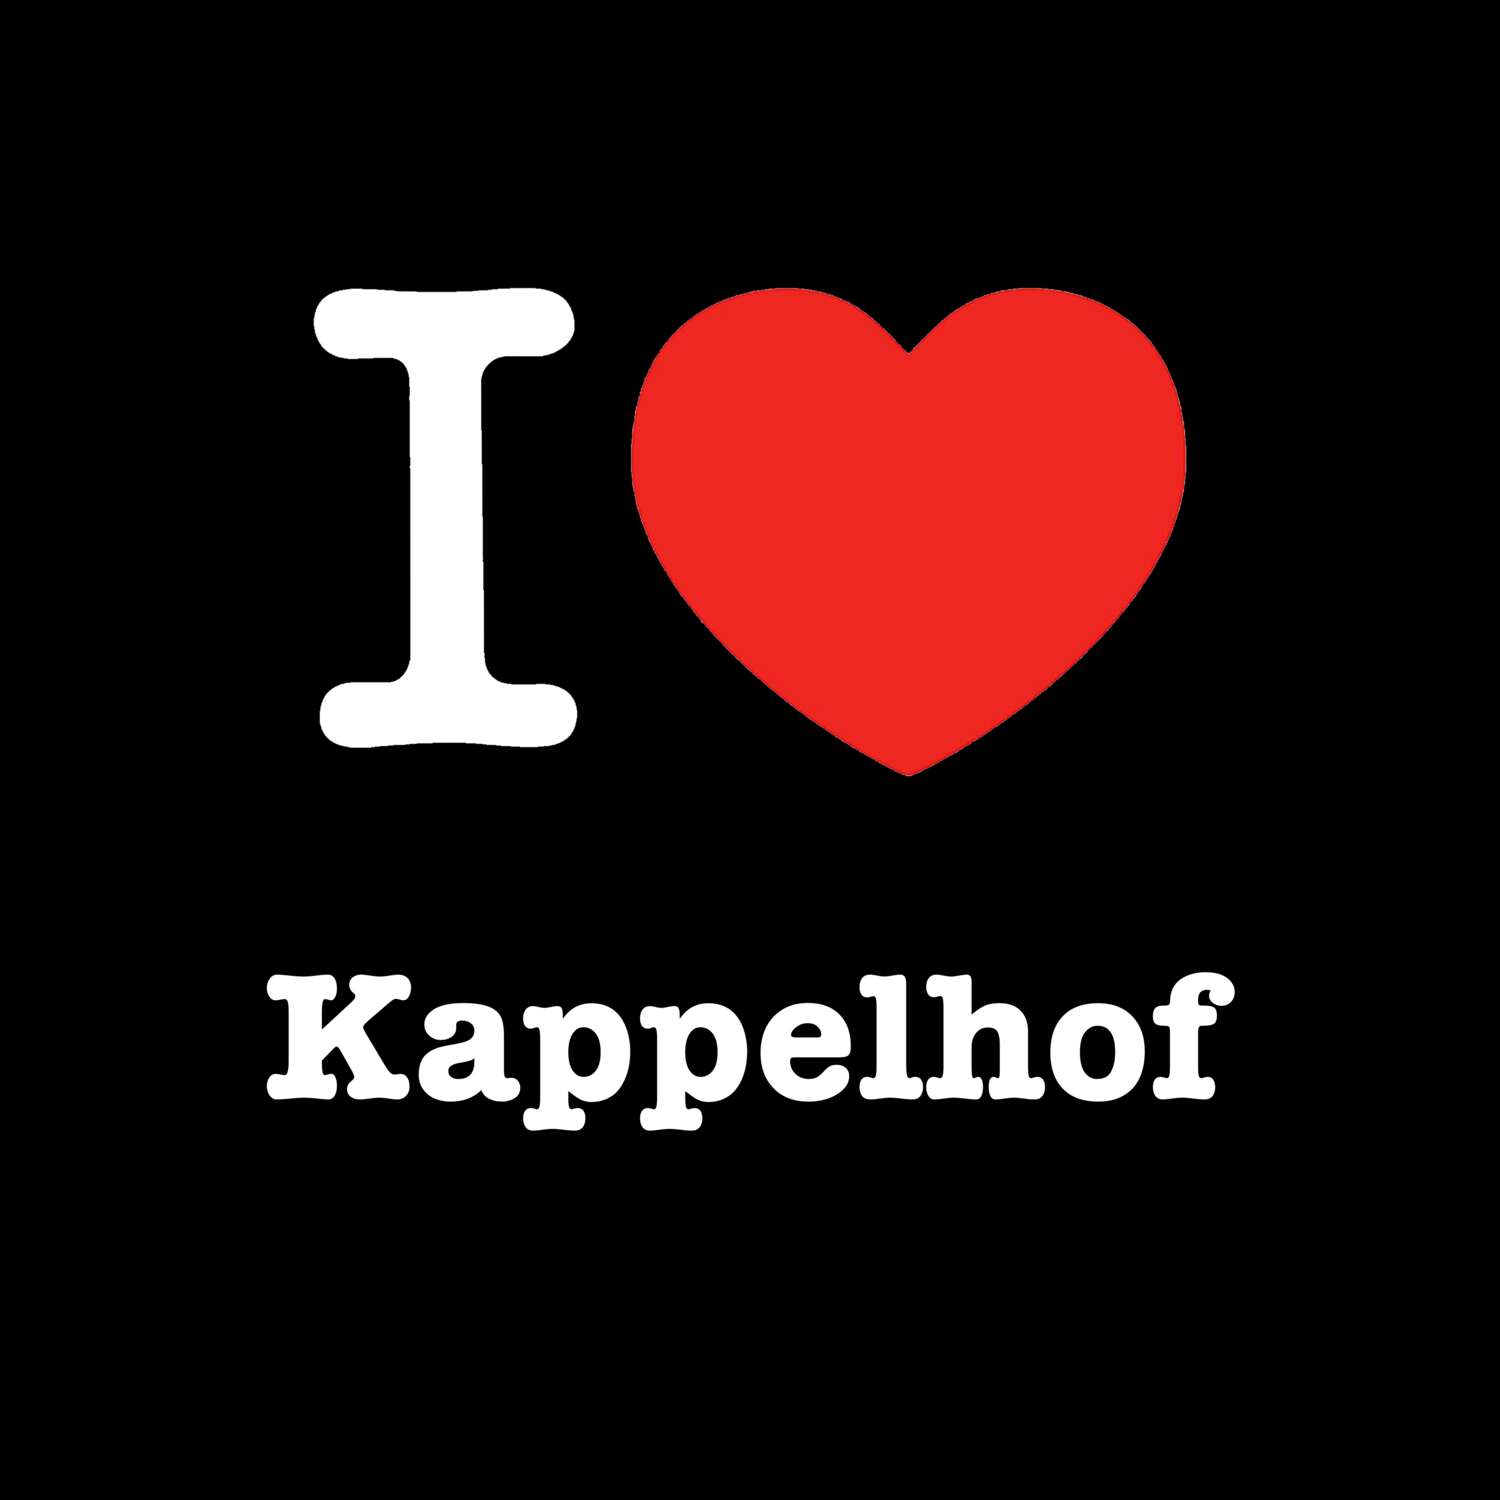 Kappelhof T-Shirt »I love«